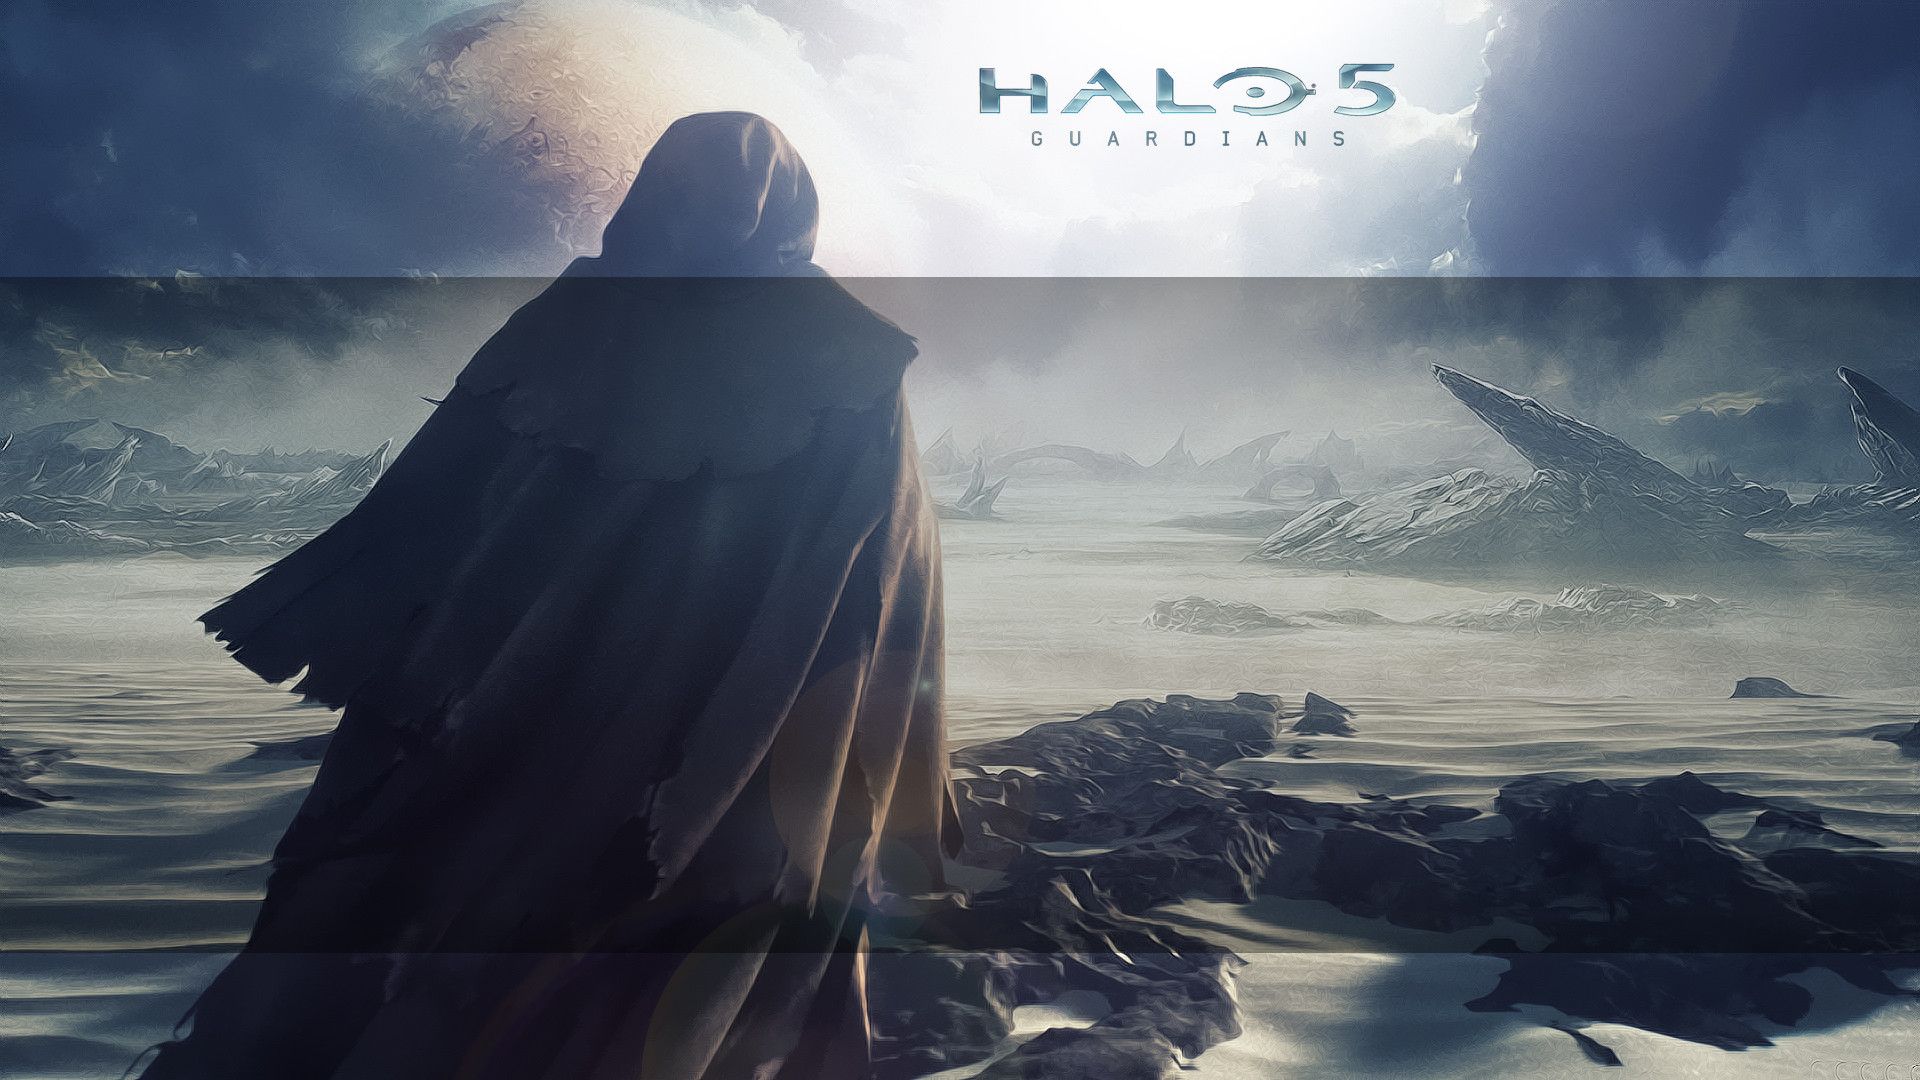 Halo 5 Guardians Video Game 2 Cool Hd Wallpaper - Hivewallpaper.com